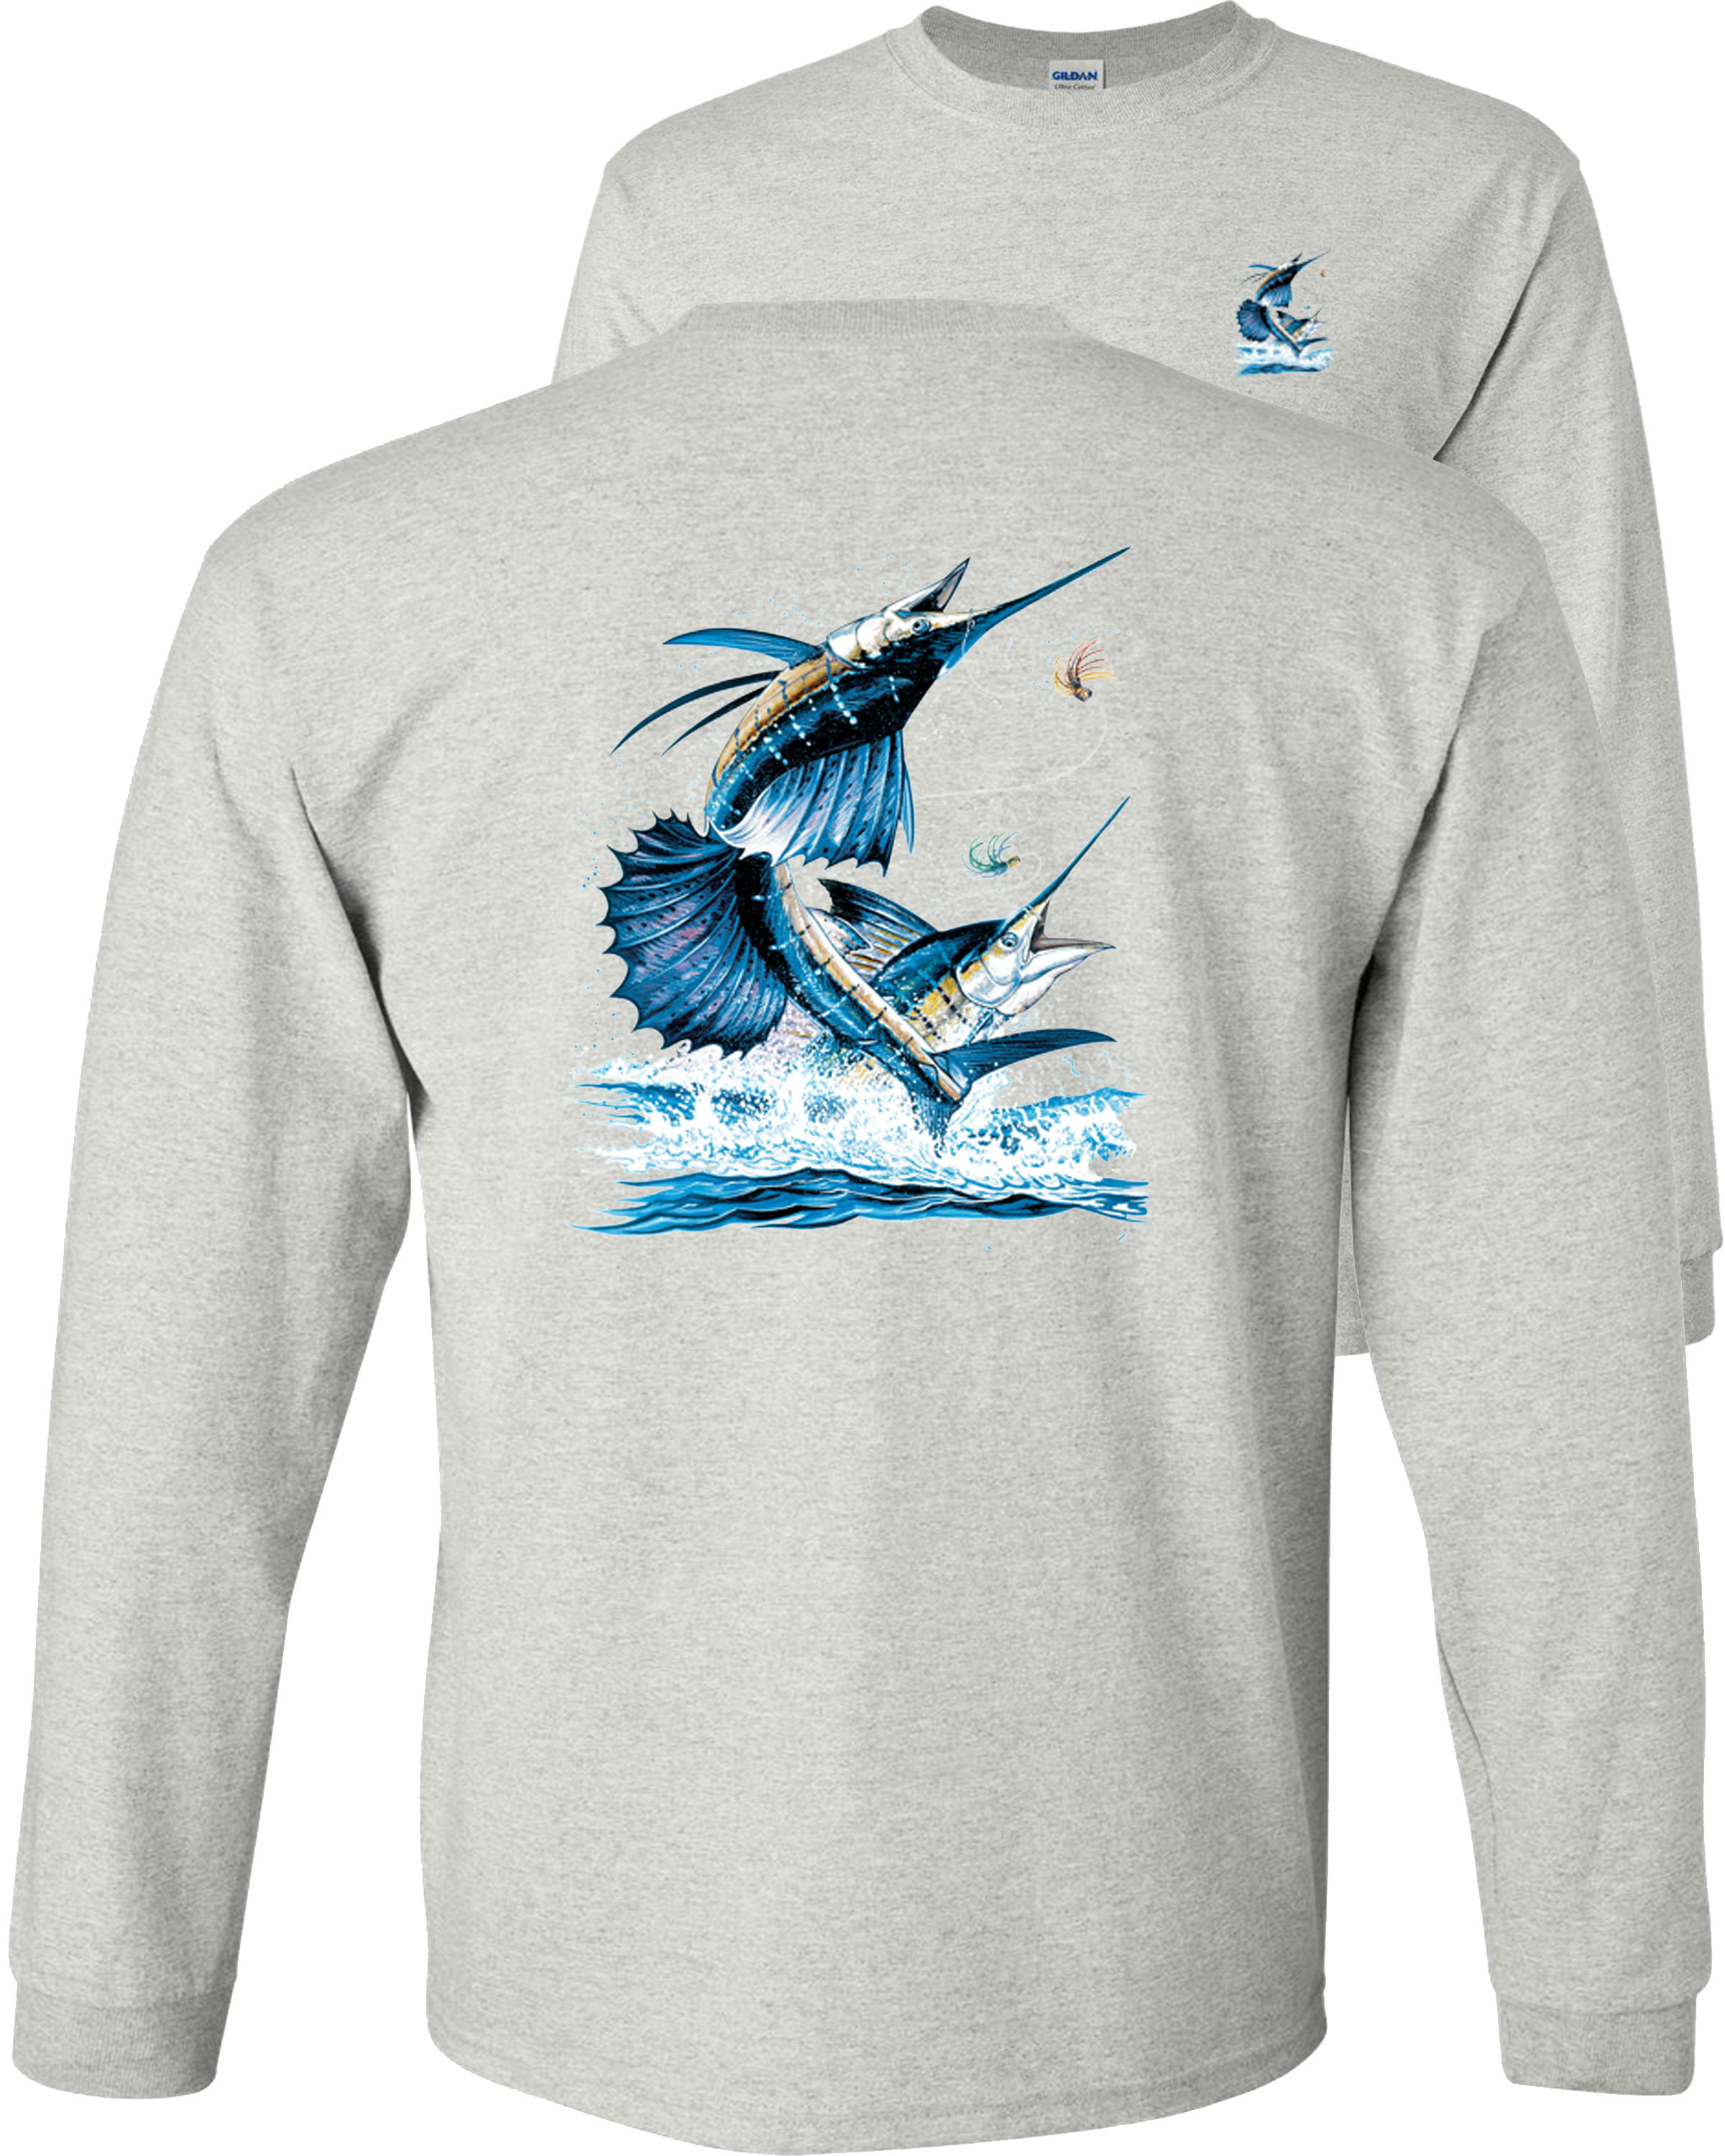 Fair Game Sailfish Fishing Long Sleeve Shirt, Swordfish Saltwater